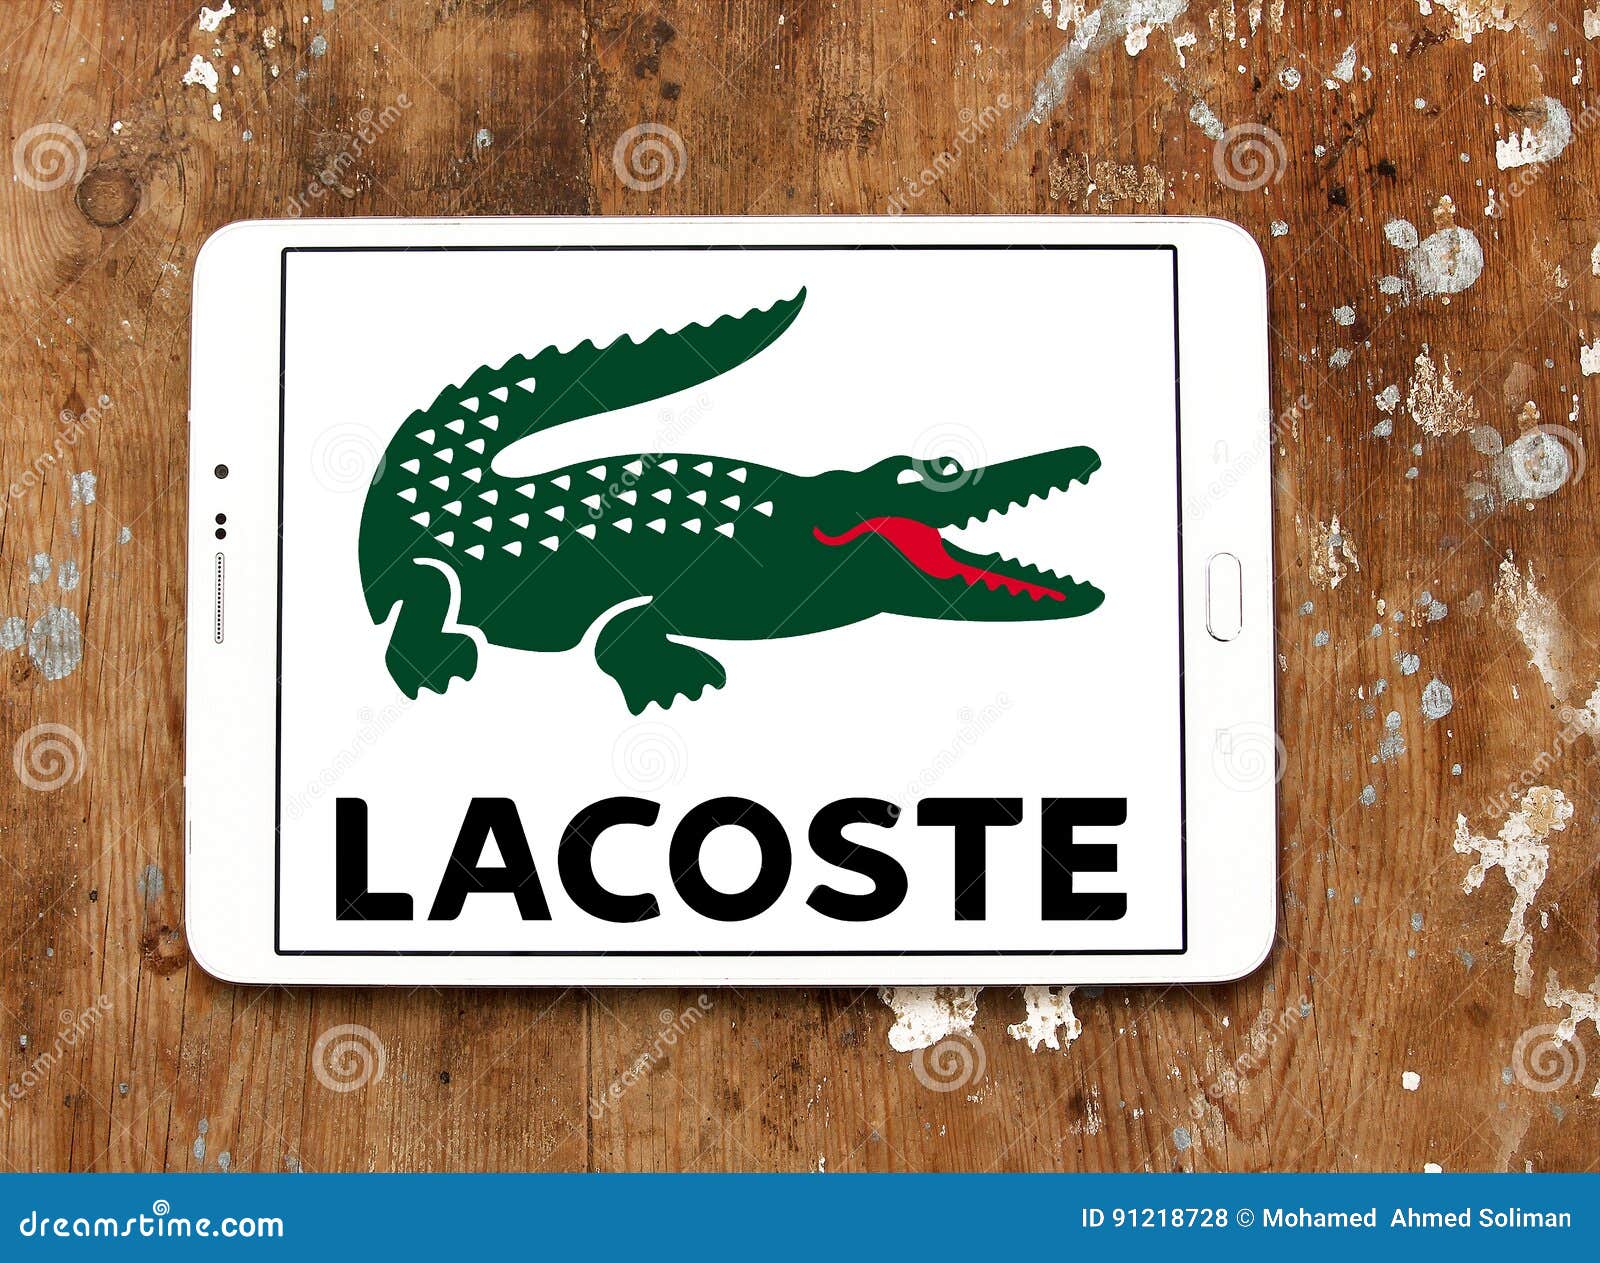 clothing company with alligator logo